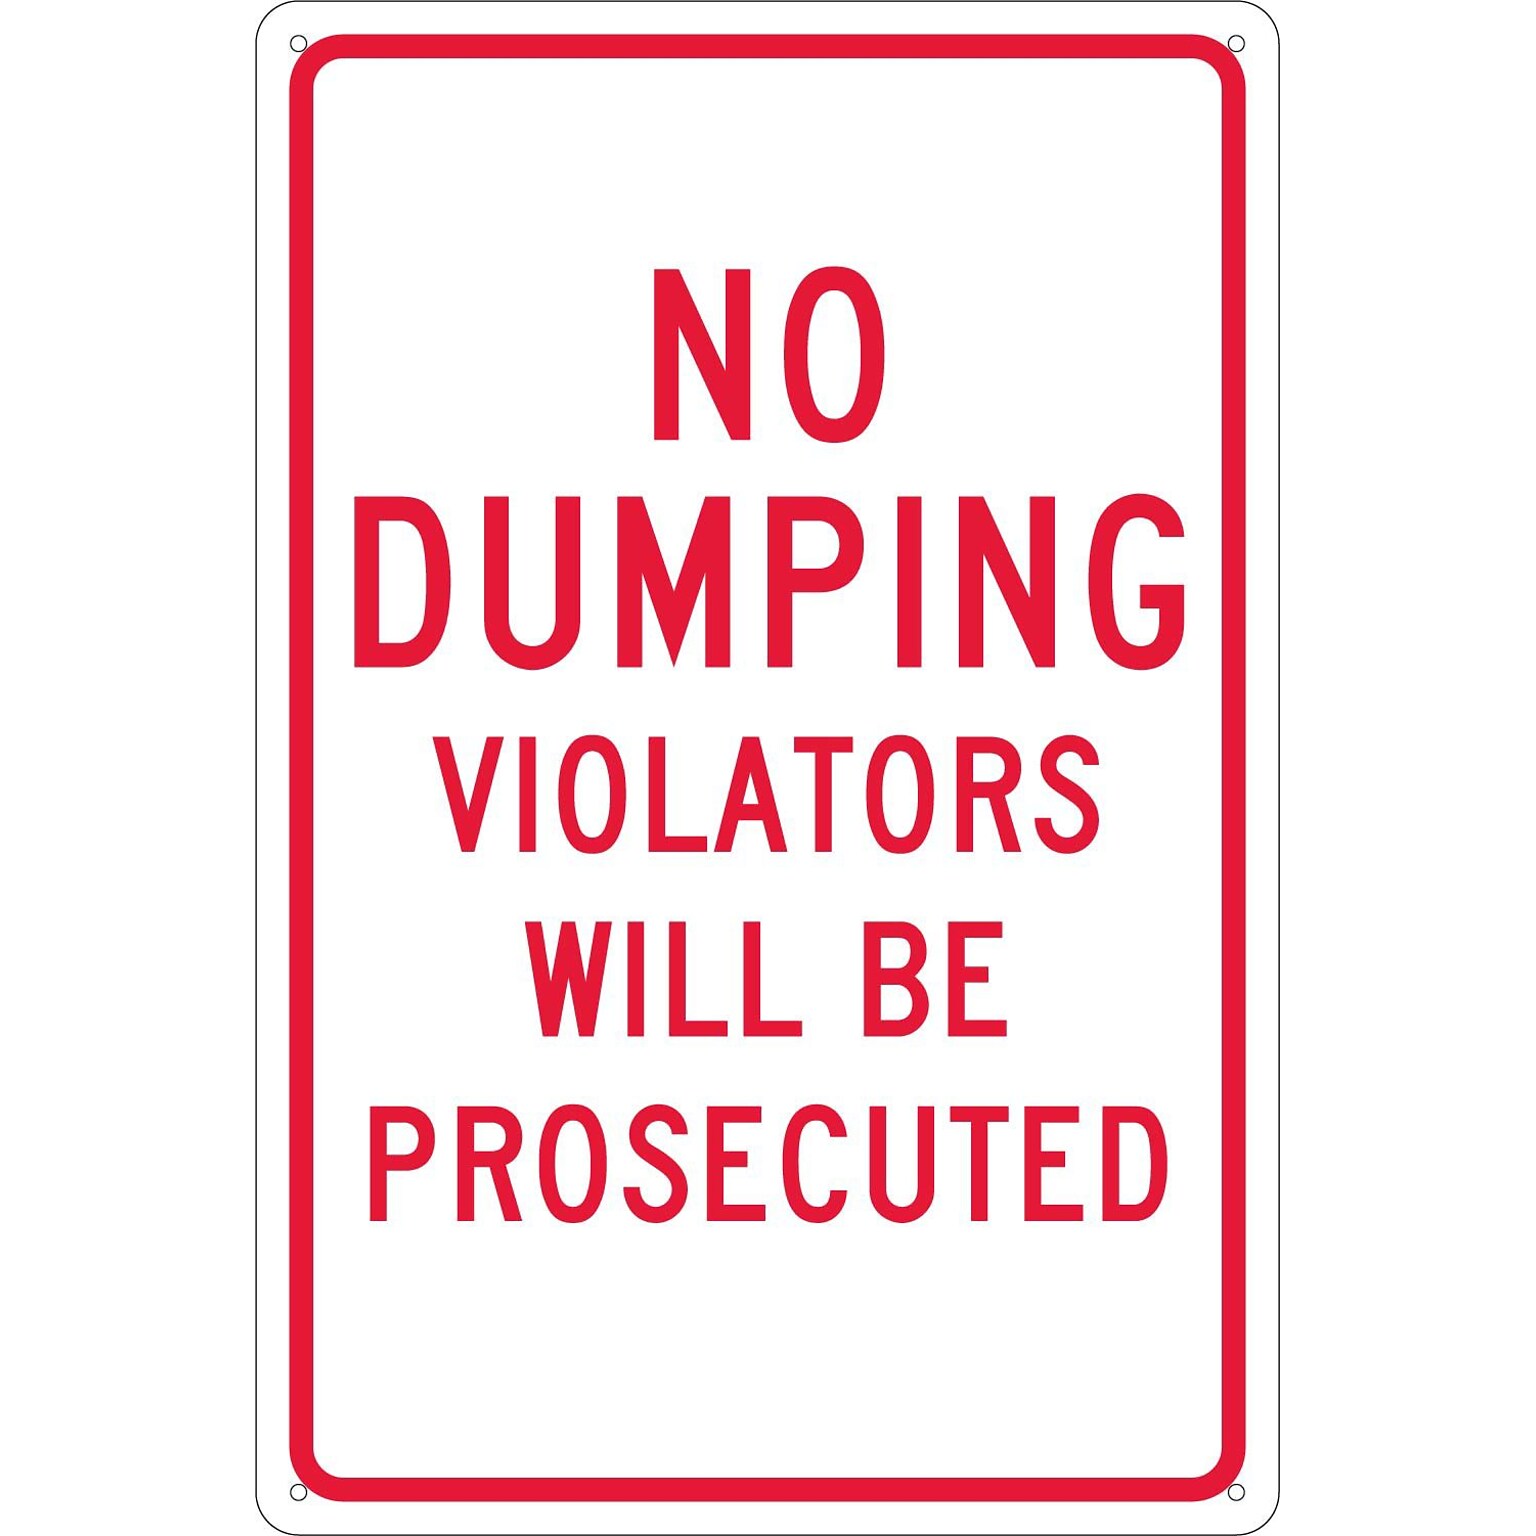 National Marker Reflective No Dumping Violators Will Be Prosecuted Warning Traffic Control Sign, 18 x 12, Aluminum (TM140G)